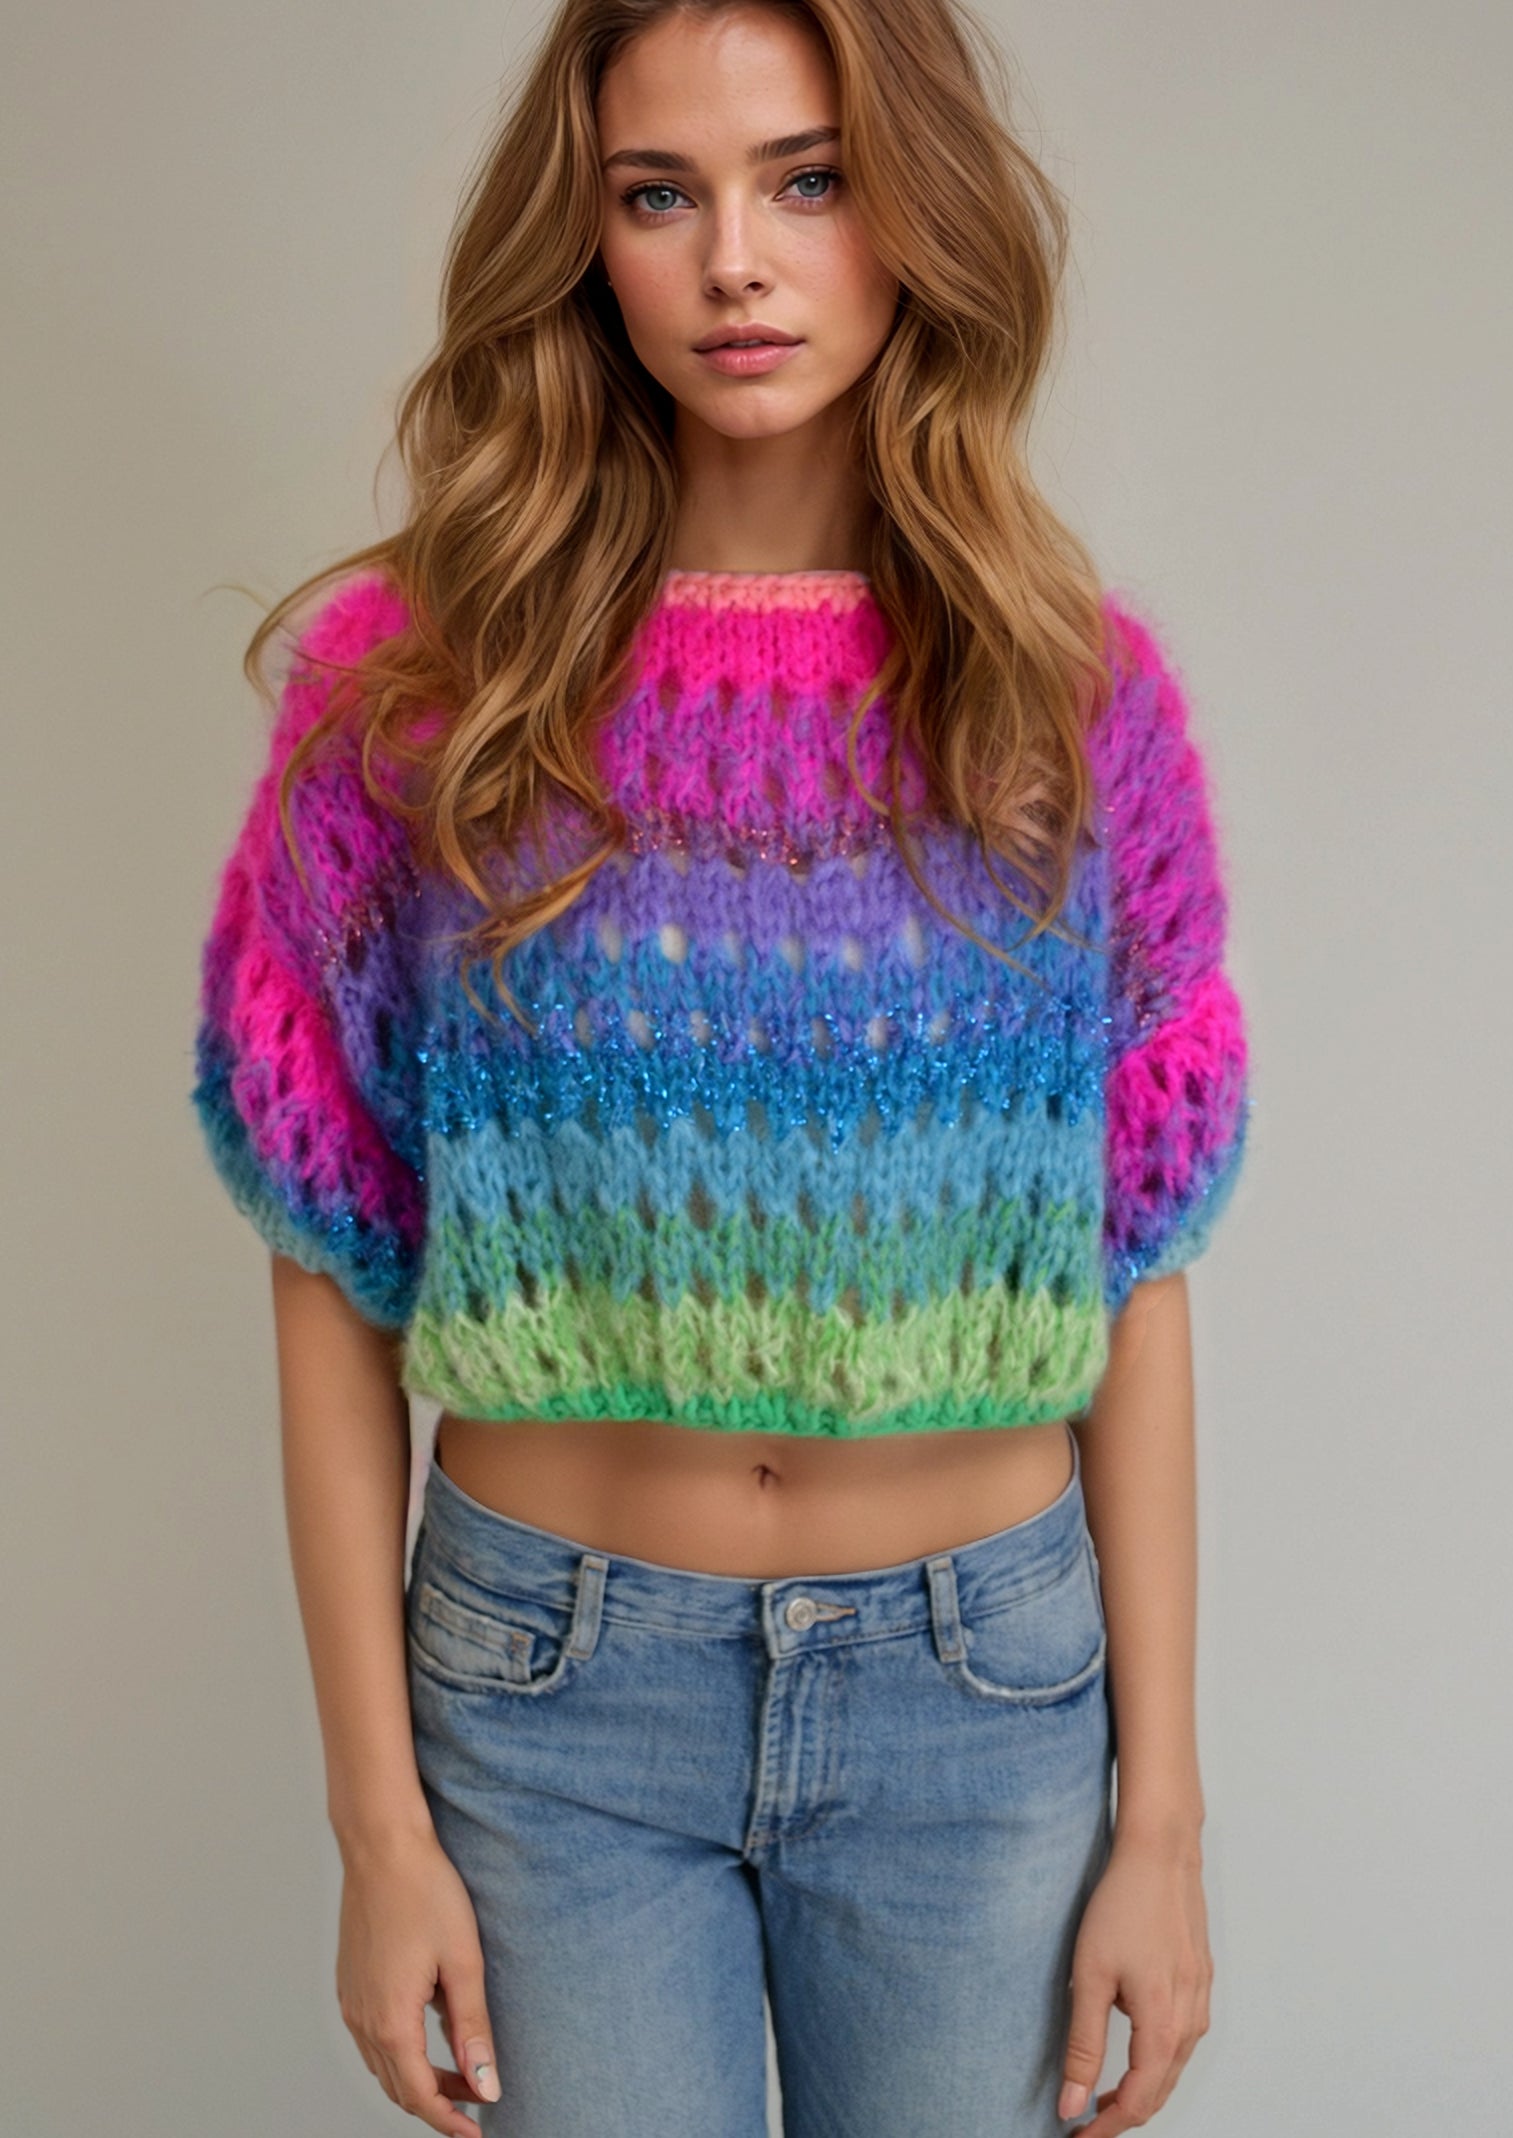 handknitted sweater, degrade, colorful knitwear, handmade